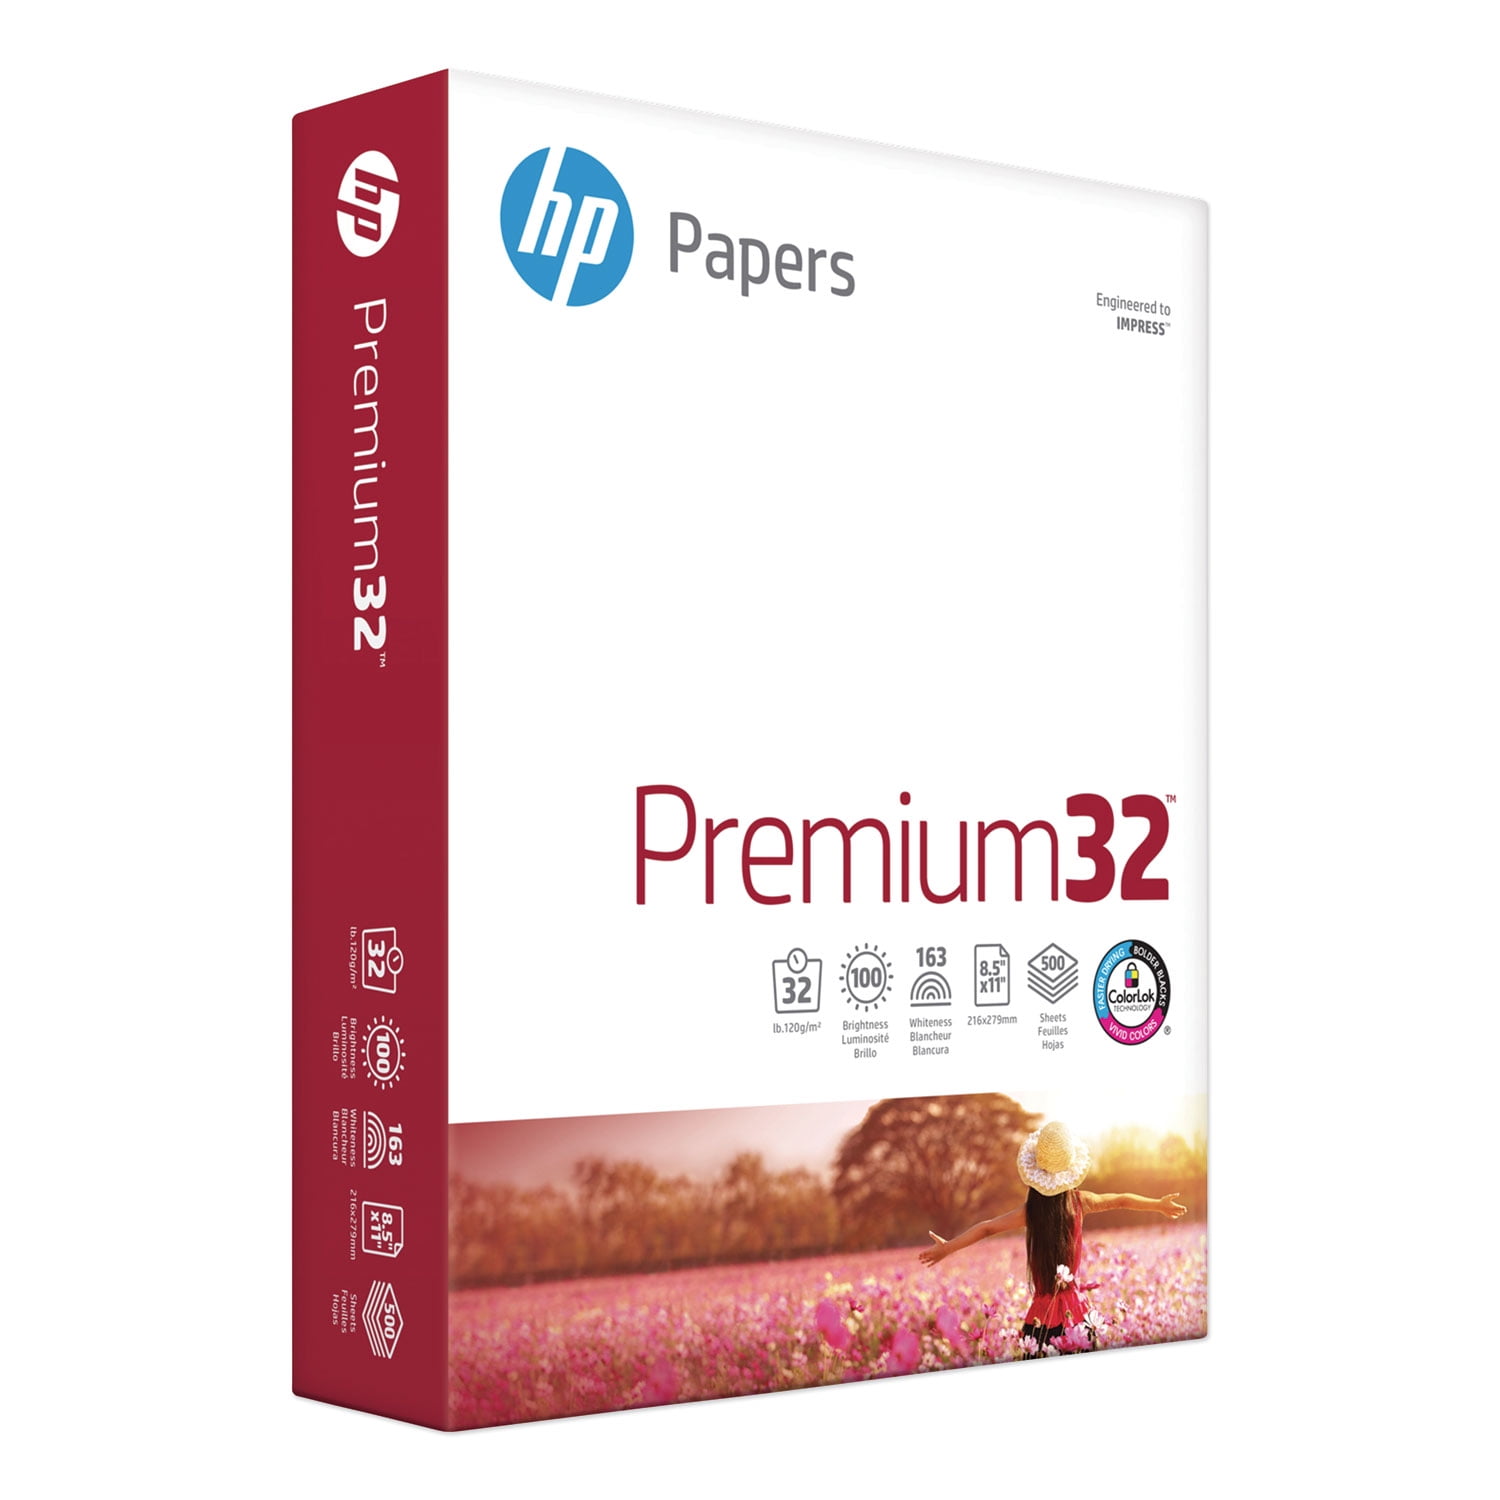 Us Letter Size Paper 8.5x11 Thermal Printer Paper Multipurpose